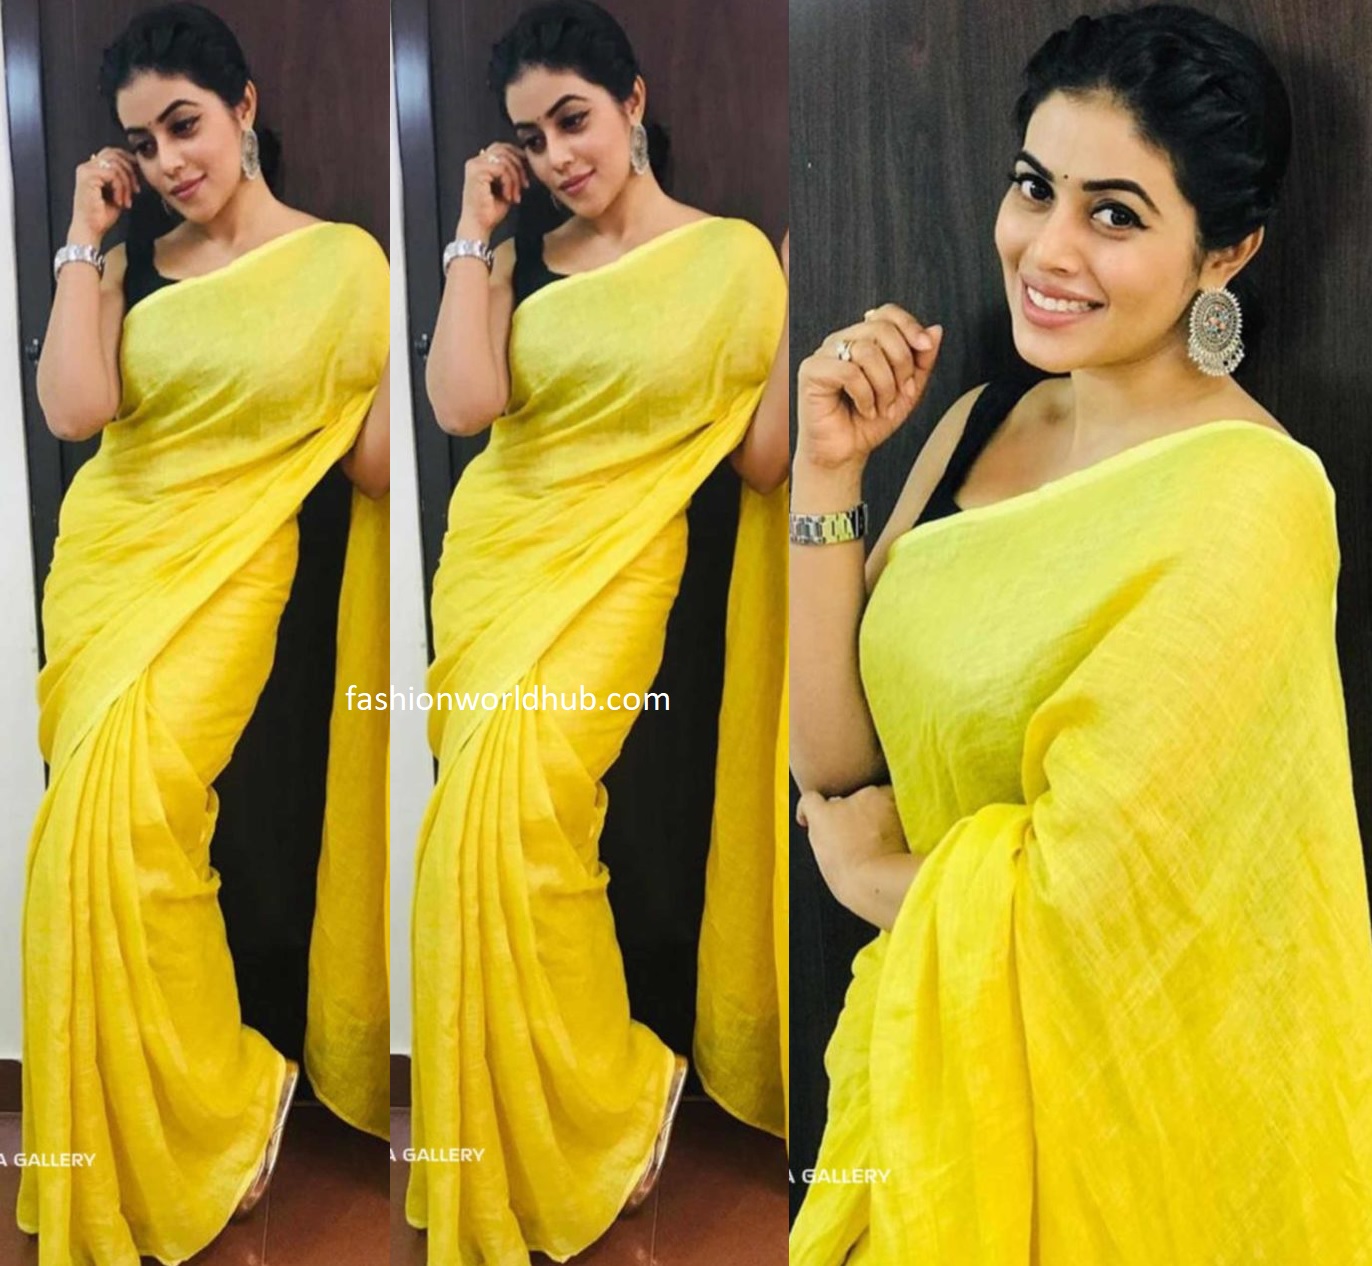 Poorna in a yellow linen saree | Fashionworldhub